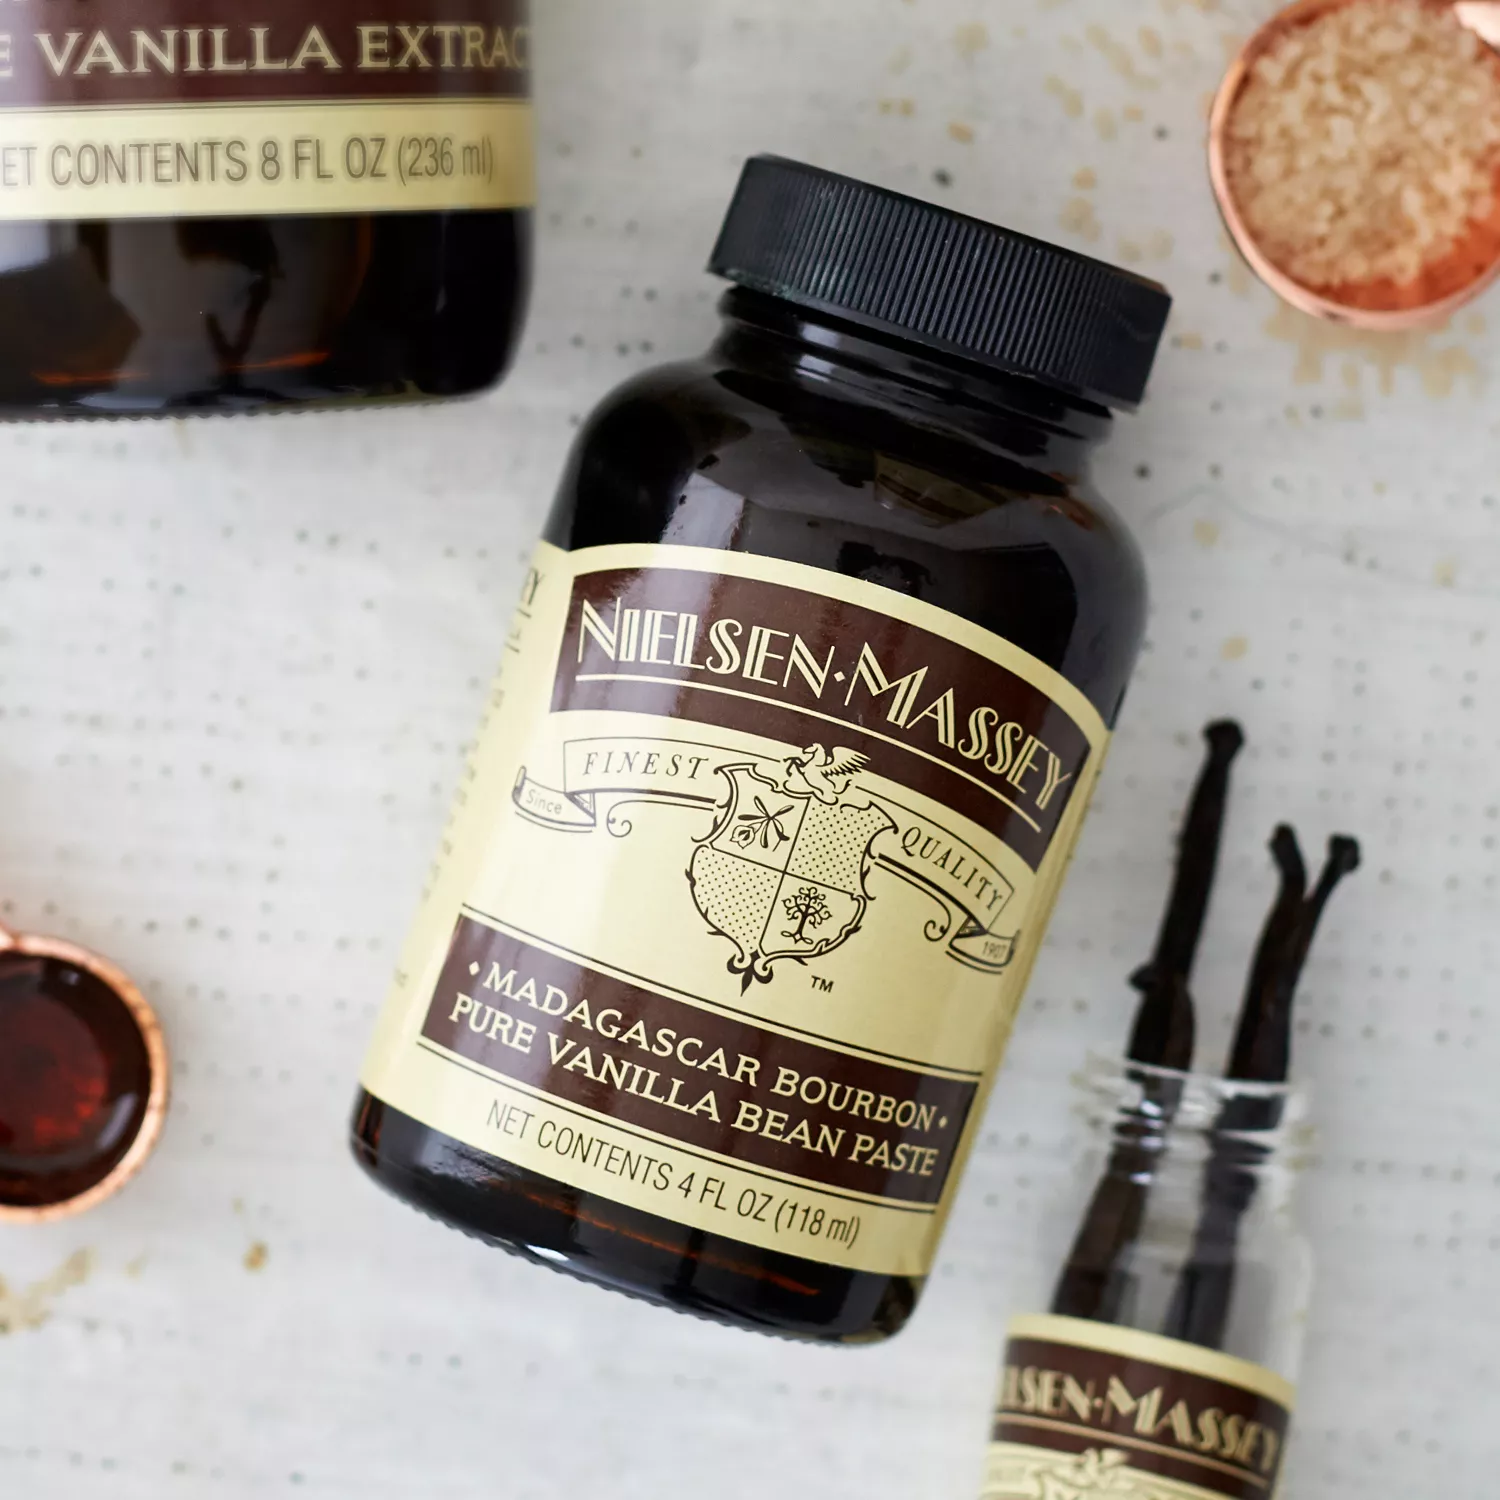 Nielsen-Massey Madagascar Pure Vanilla Bean Paste